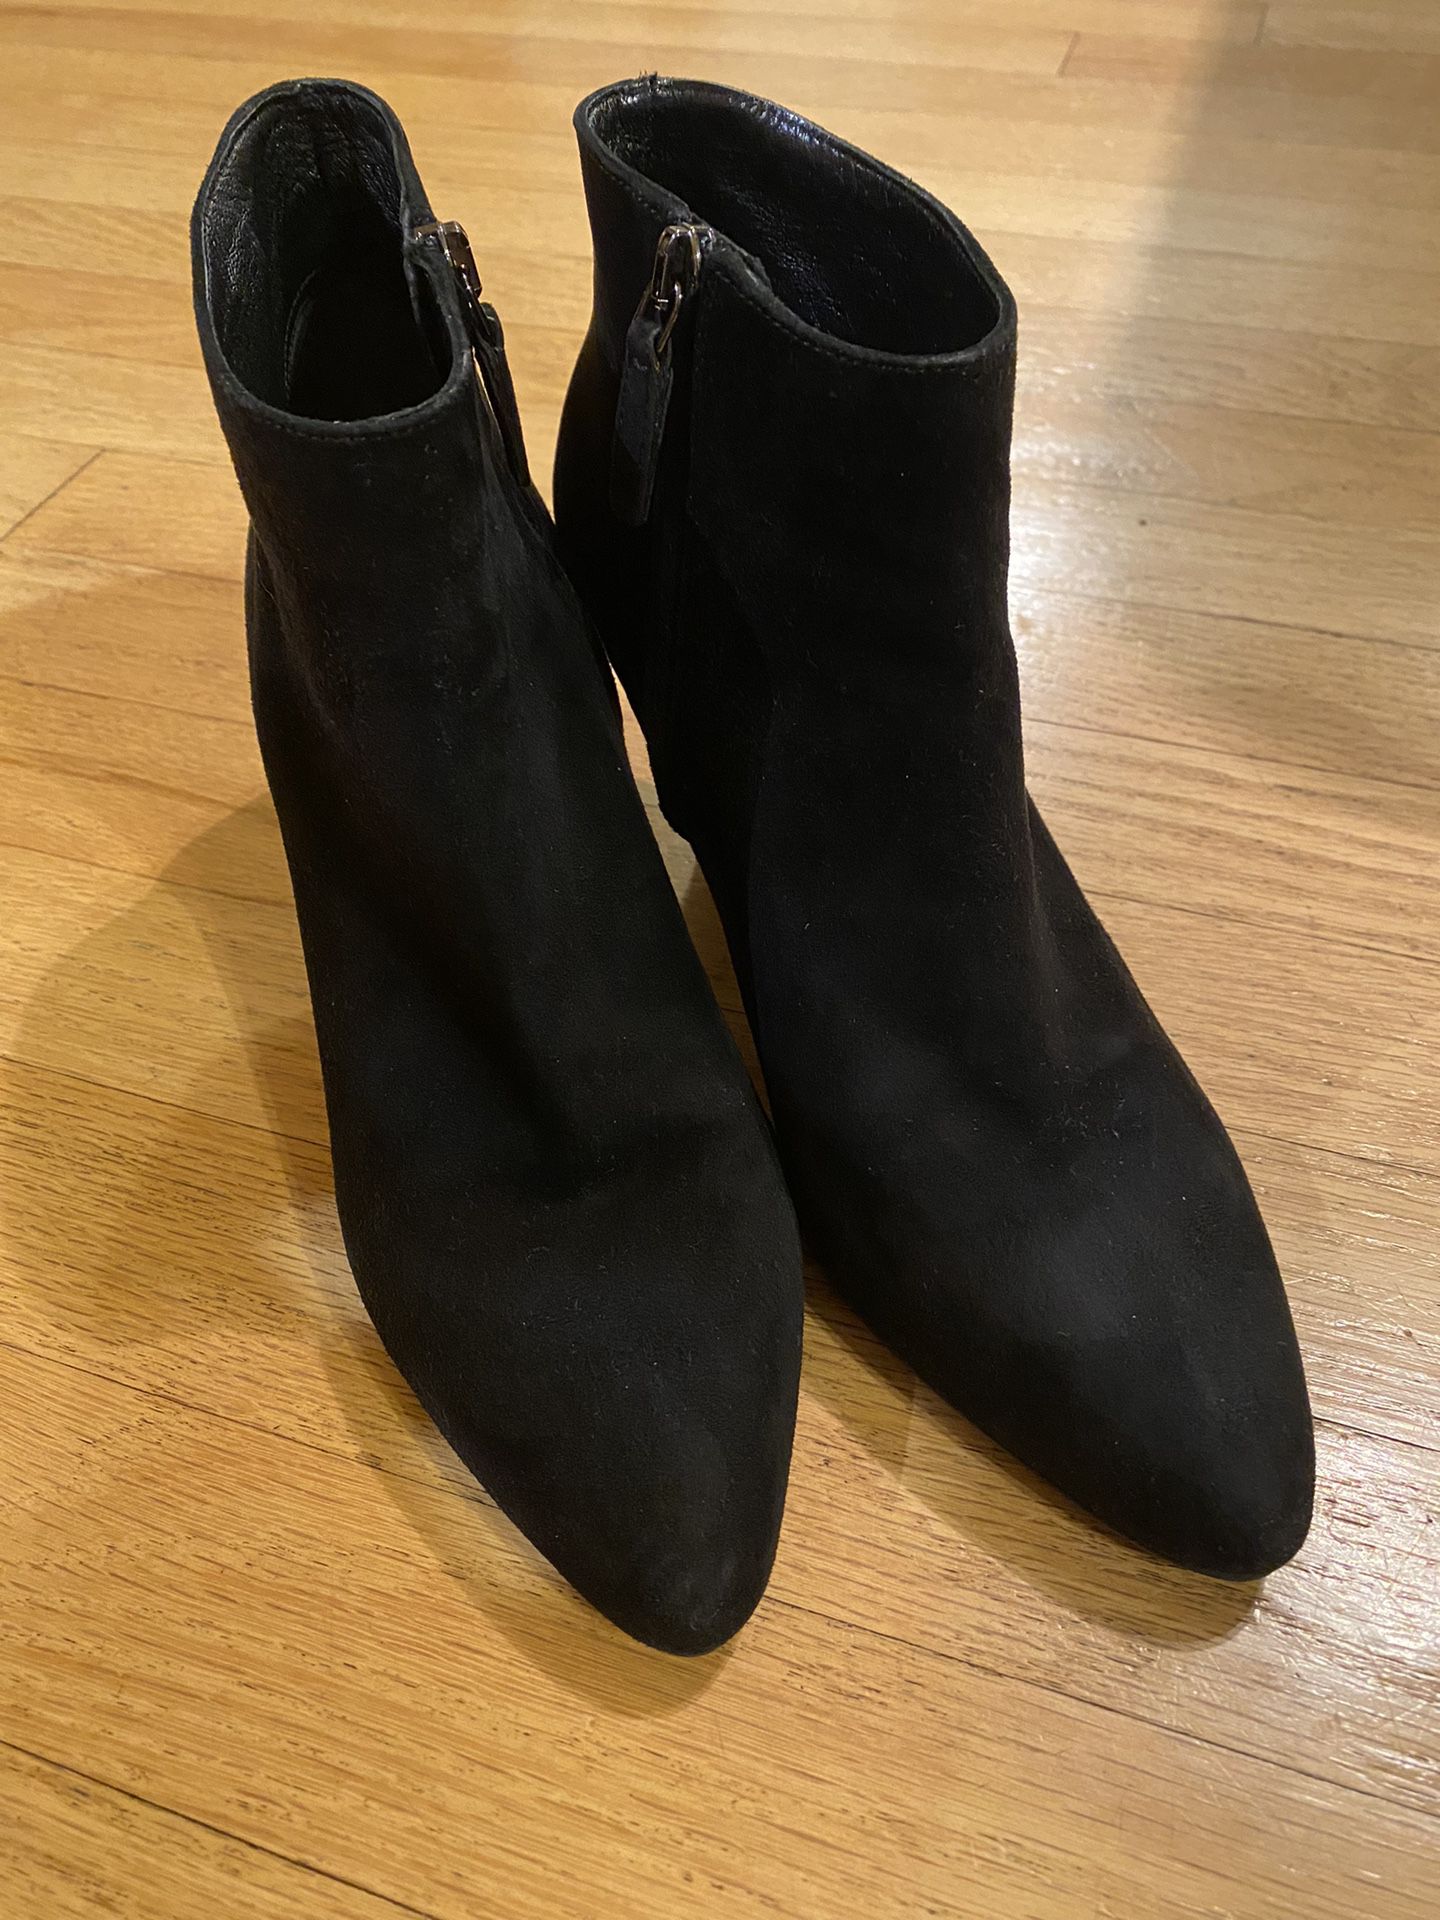 Prada Suede Black Boots 37.5